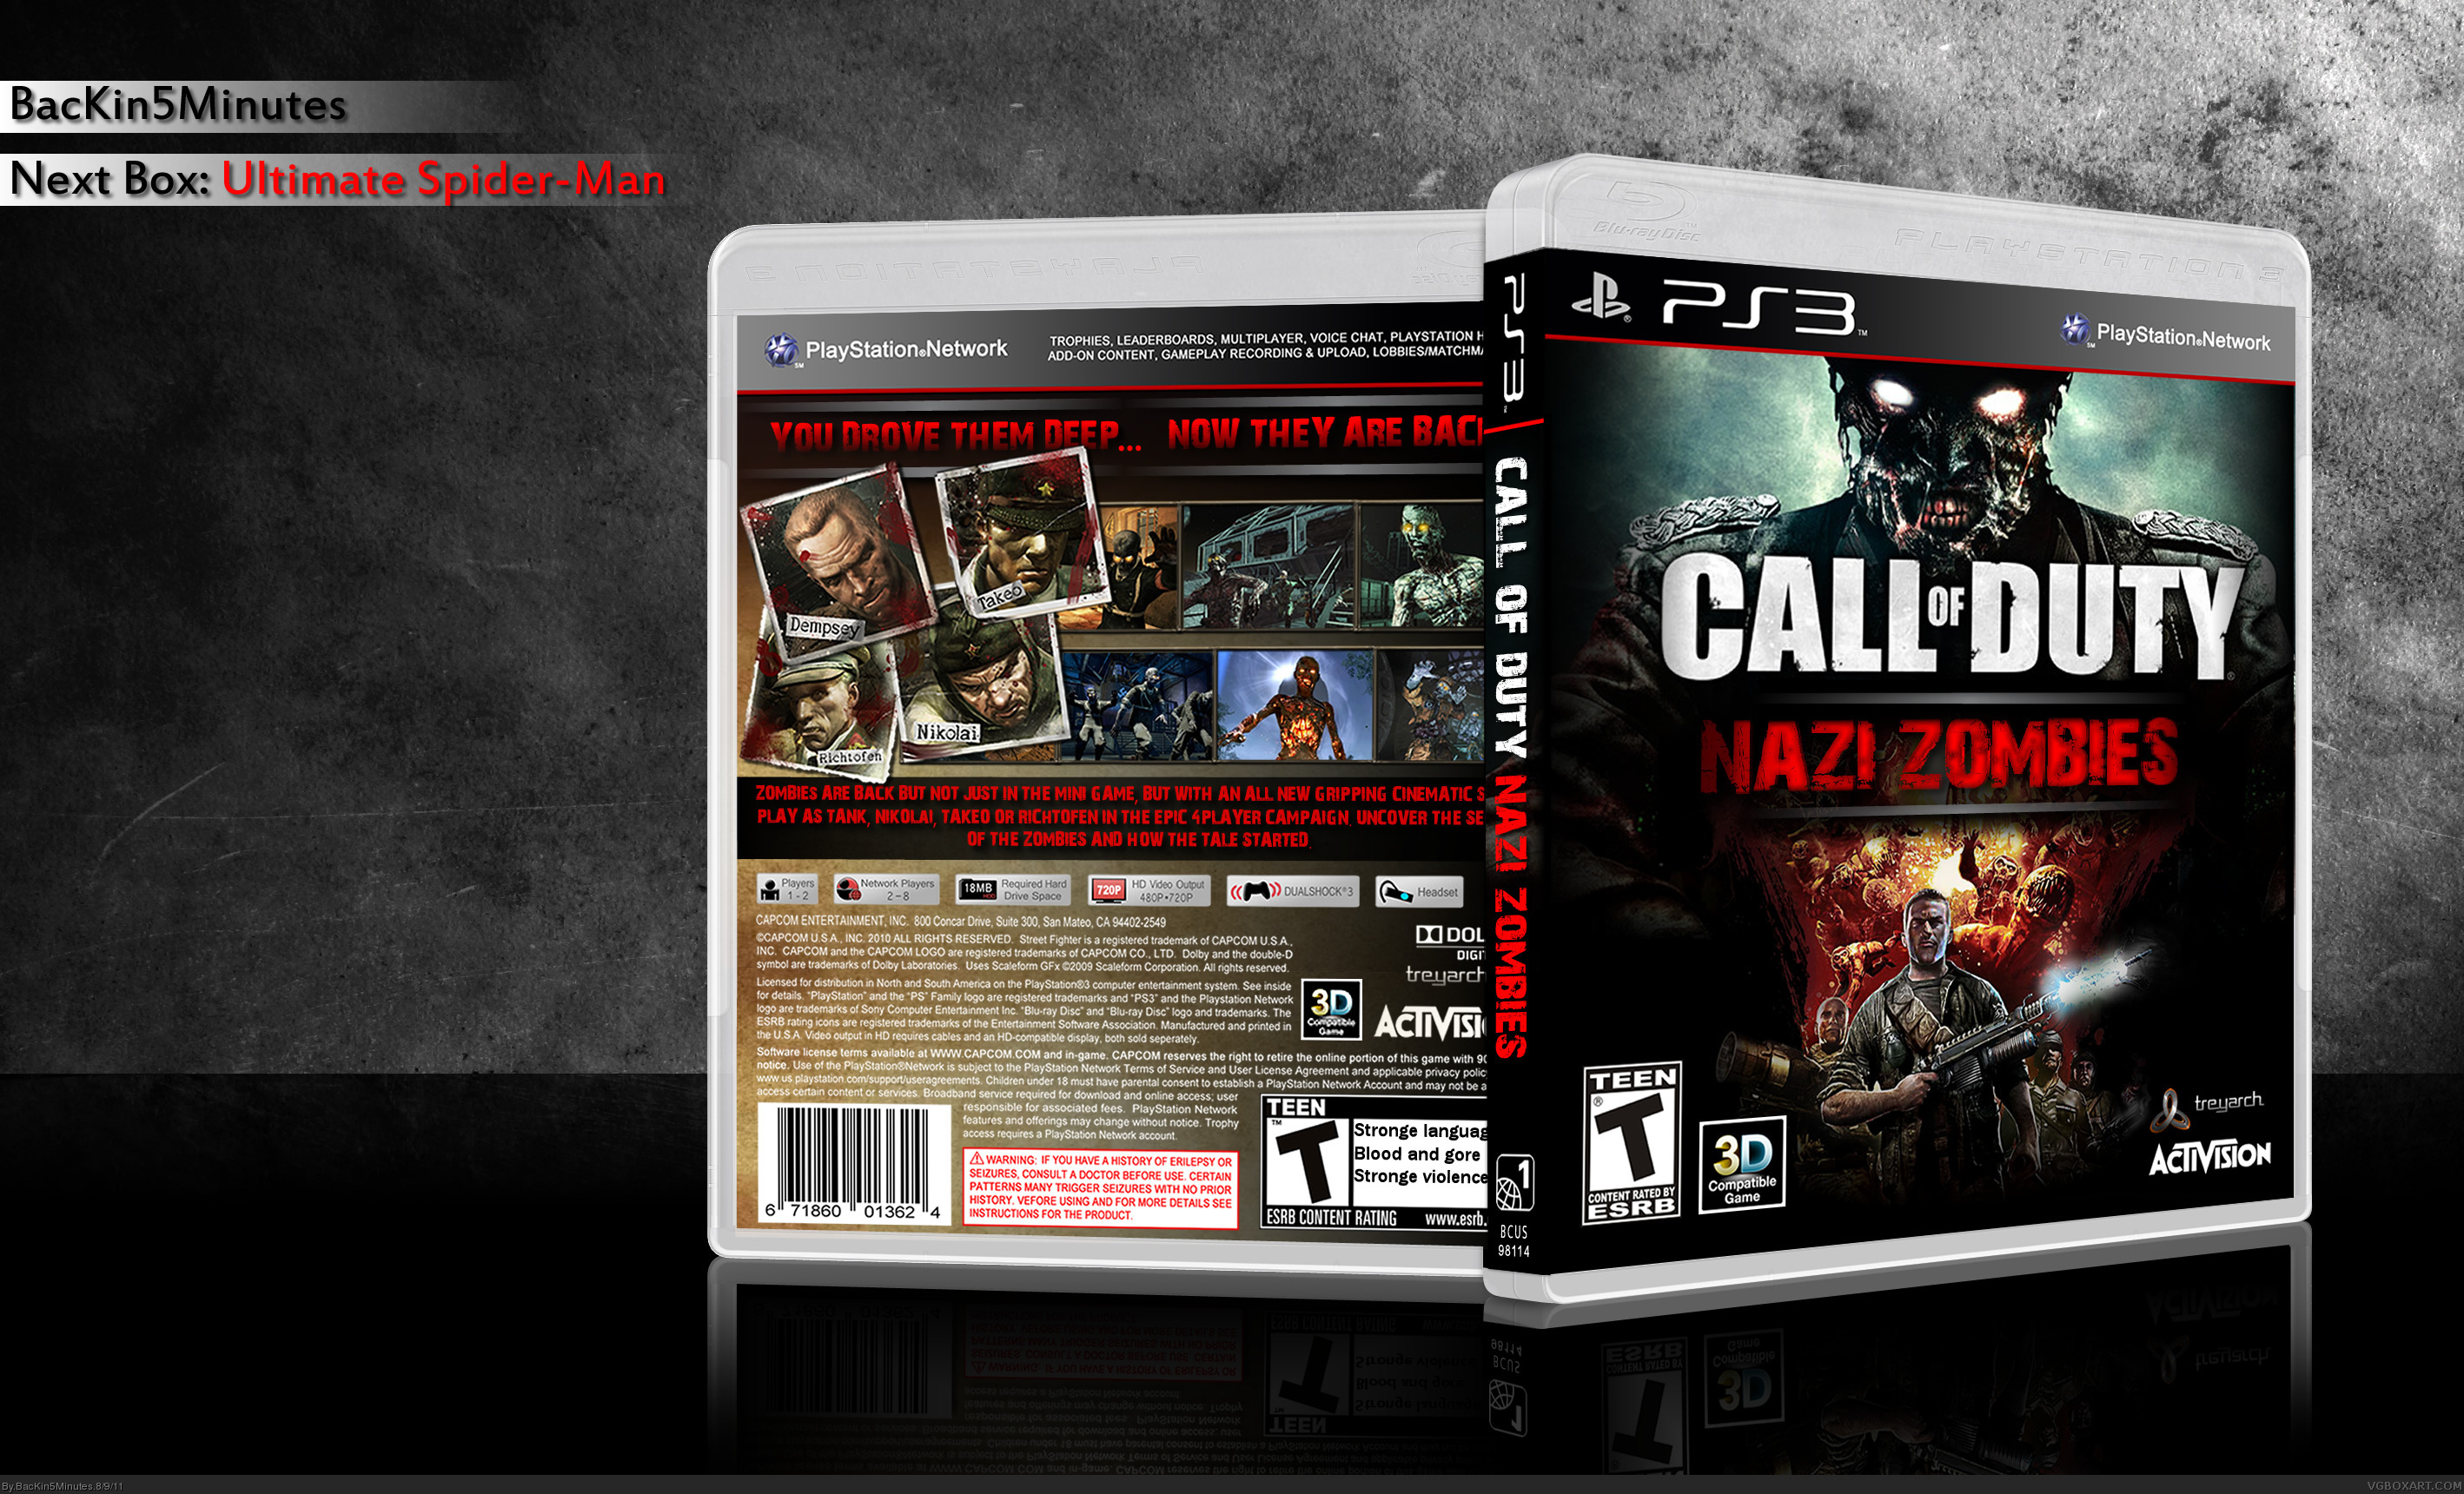 Call of duty black ops зомби карты. Call of Duty Black ops 3 диск. Call of Duty Black ops 4 диск. Диск на PS 4 Call of Duty Black ops Zombies. Black ops 2 диск.